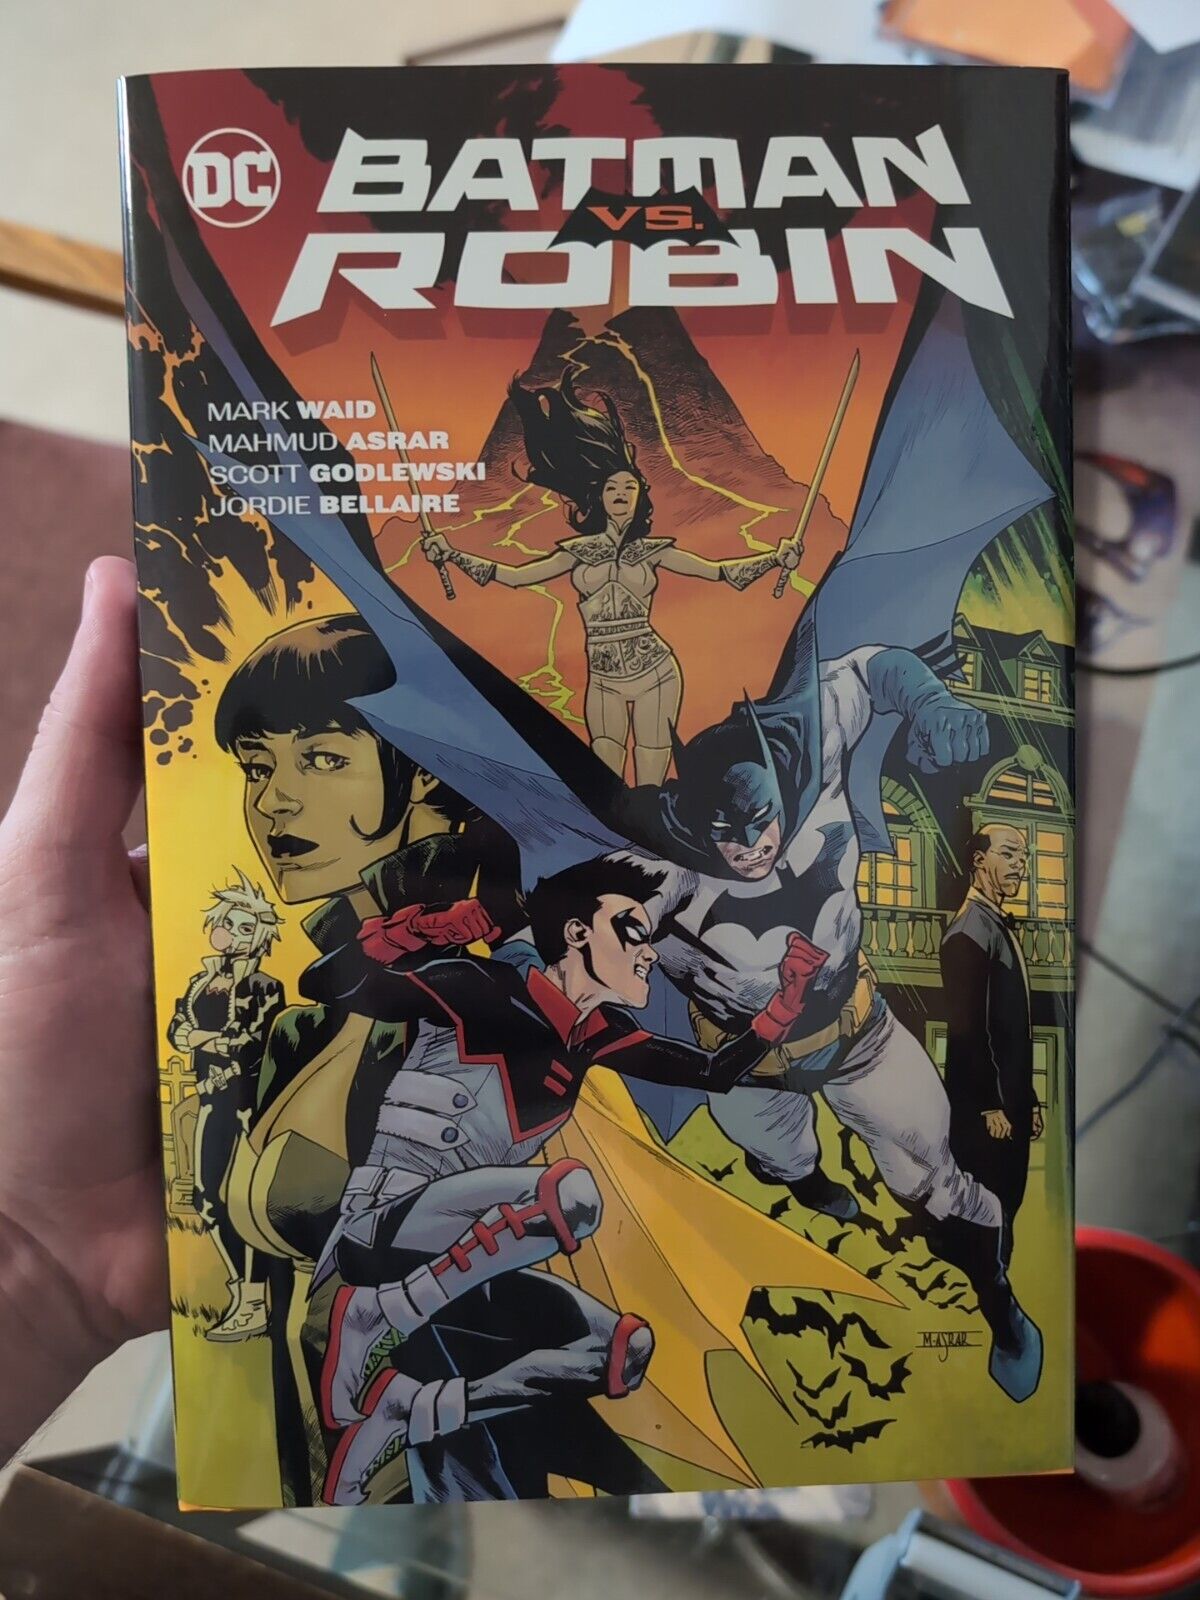 Batman vs Robin, DC Comics Hardcover with dust jacket, New